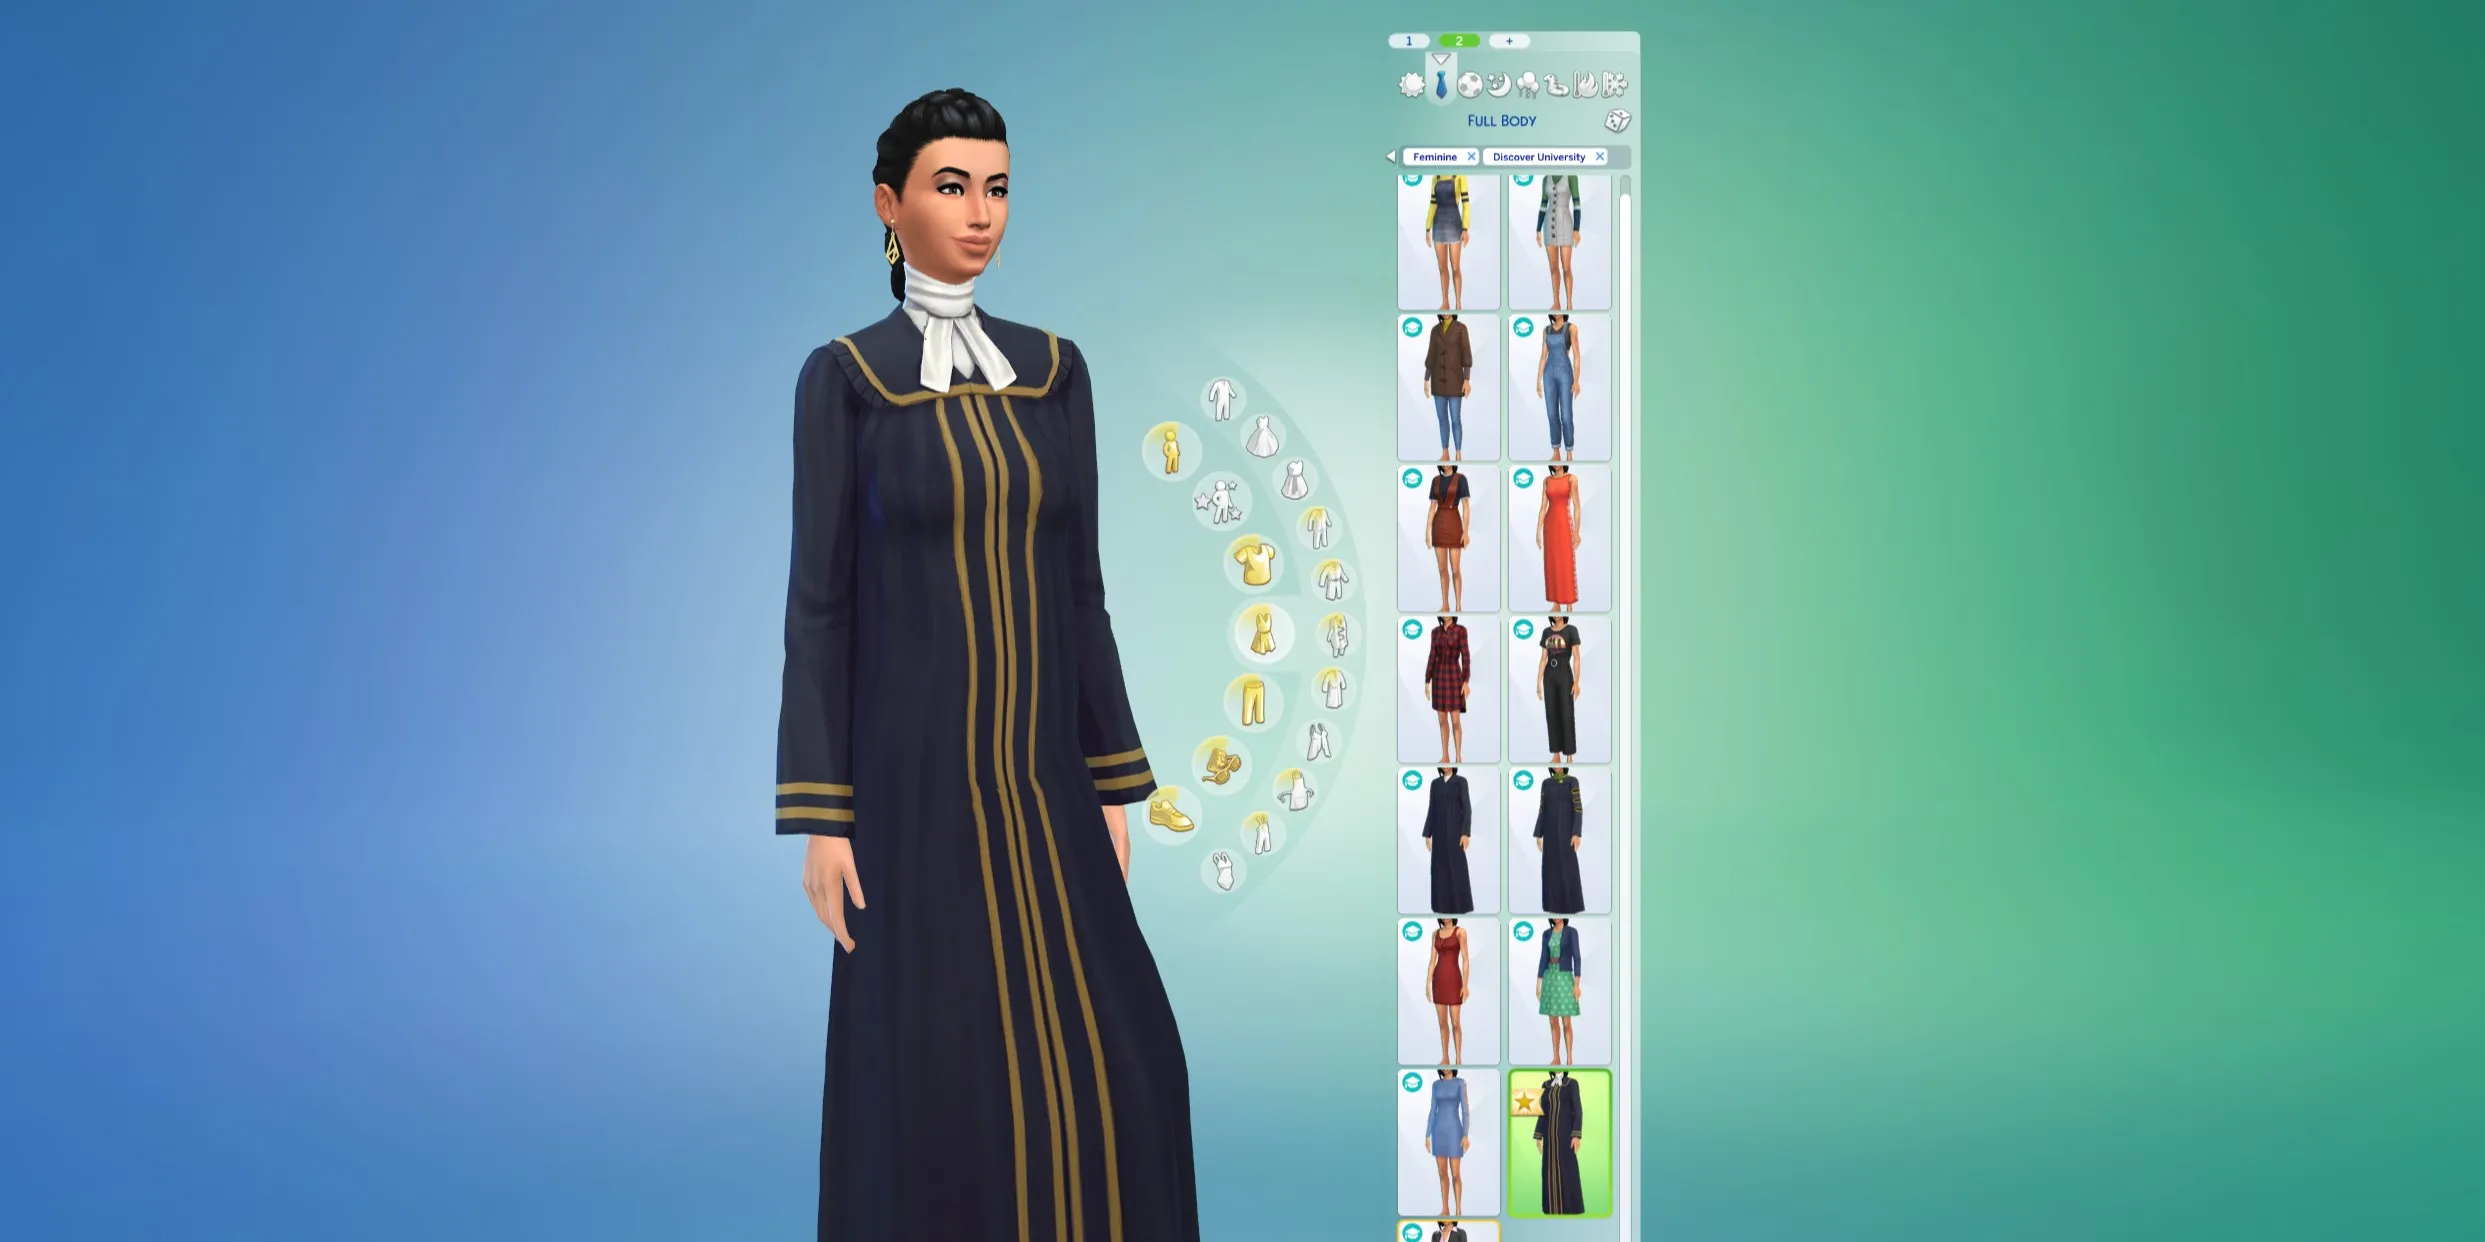 The Sims 4：裁判官の服を着たSimの画像